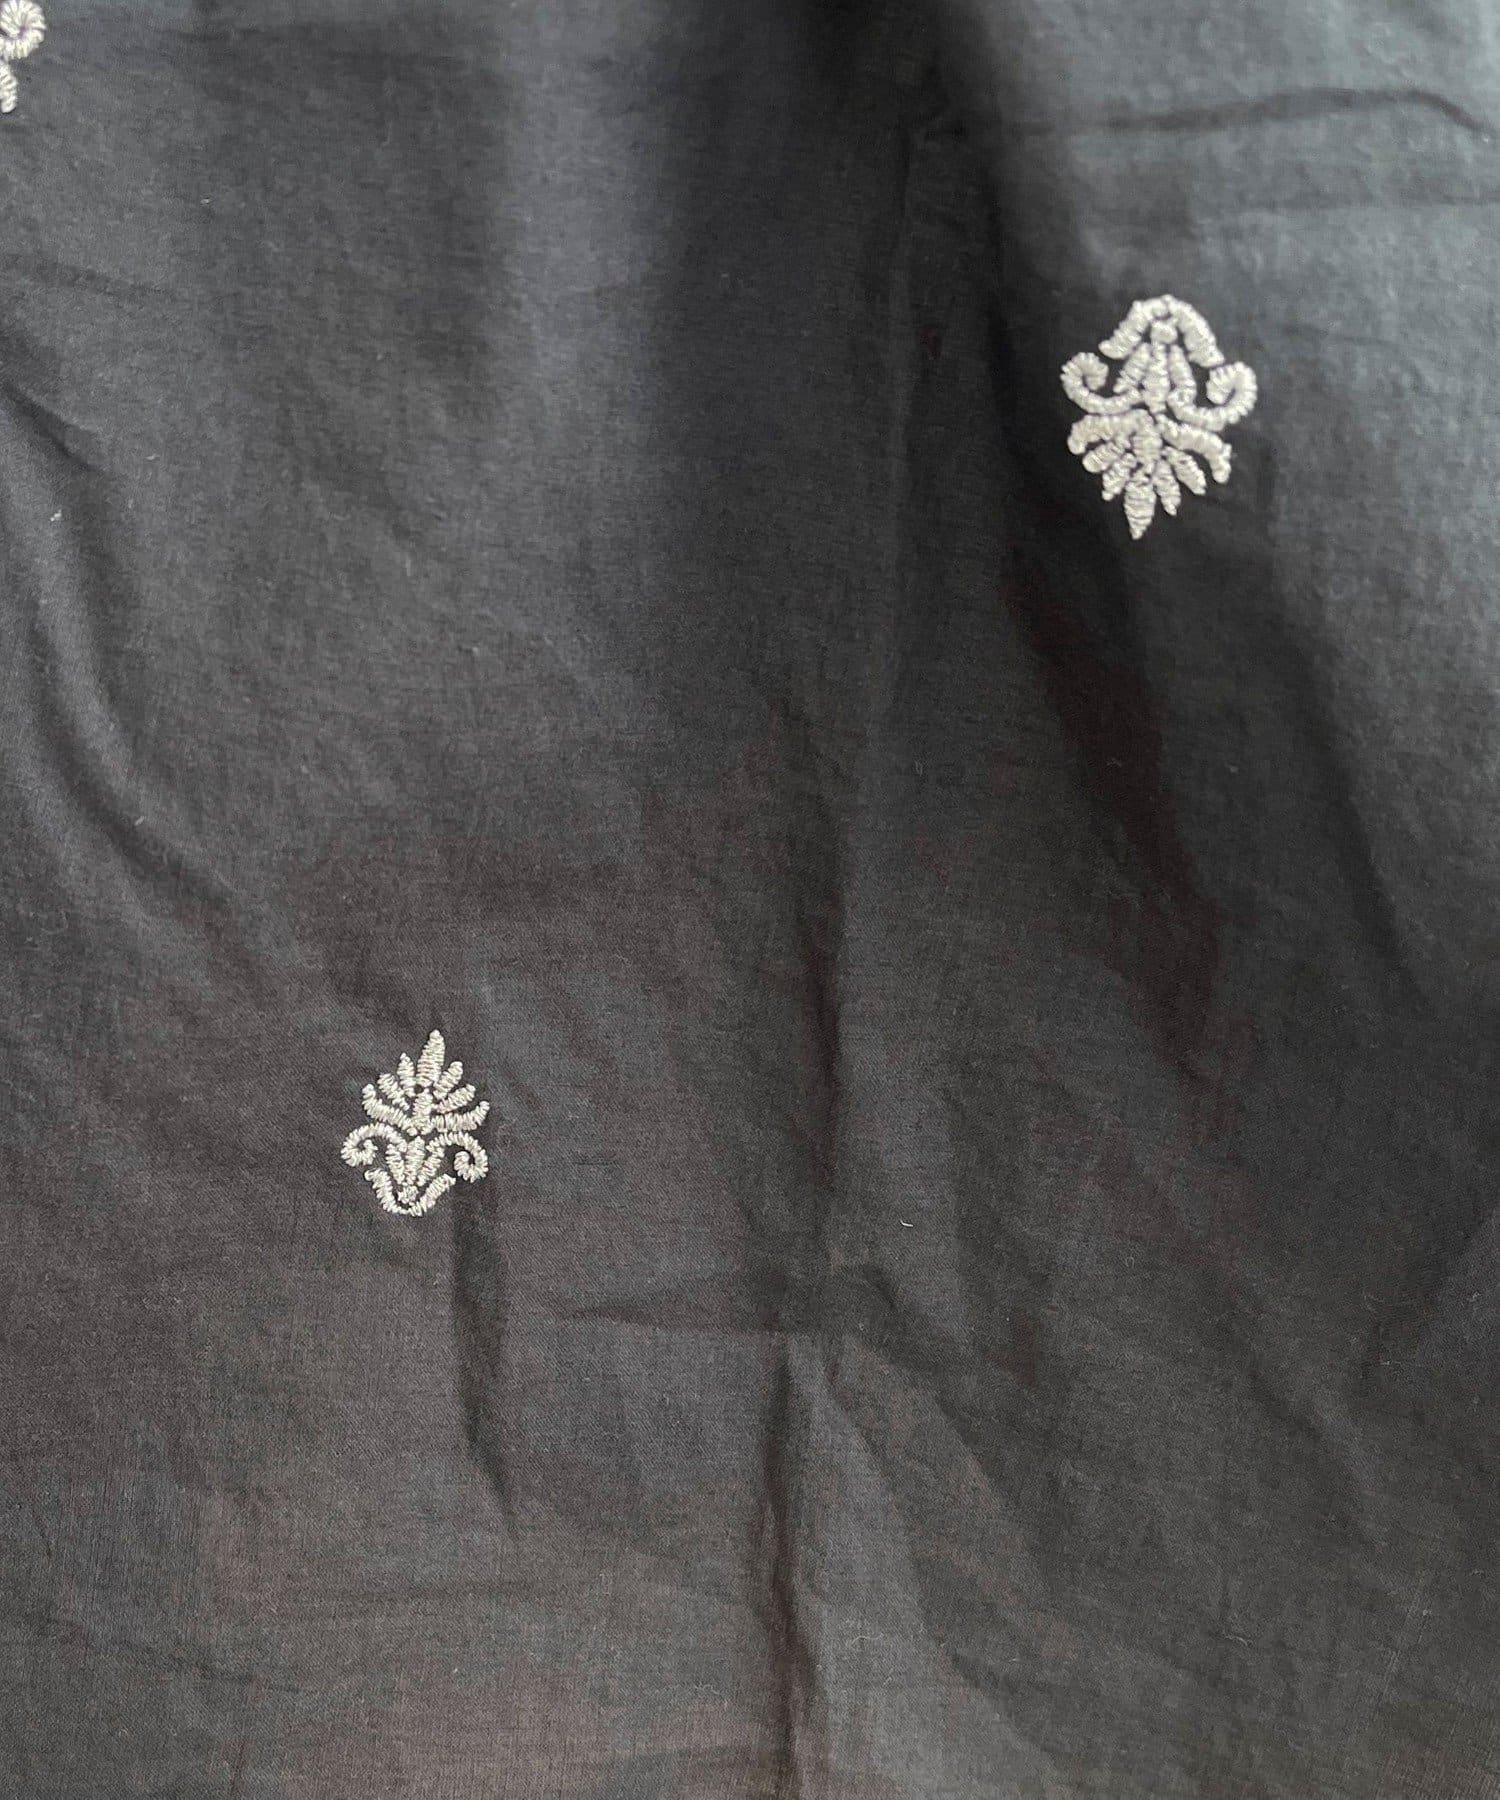 FREDY & GLOSTER(フレディ アンド グロスター) MADE INDIA ZARI刺繍ショートブラウス